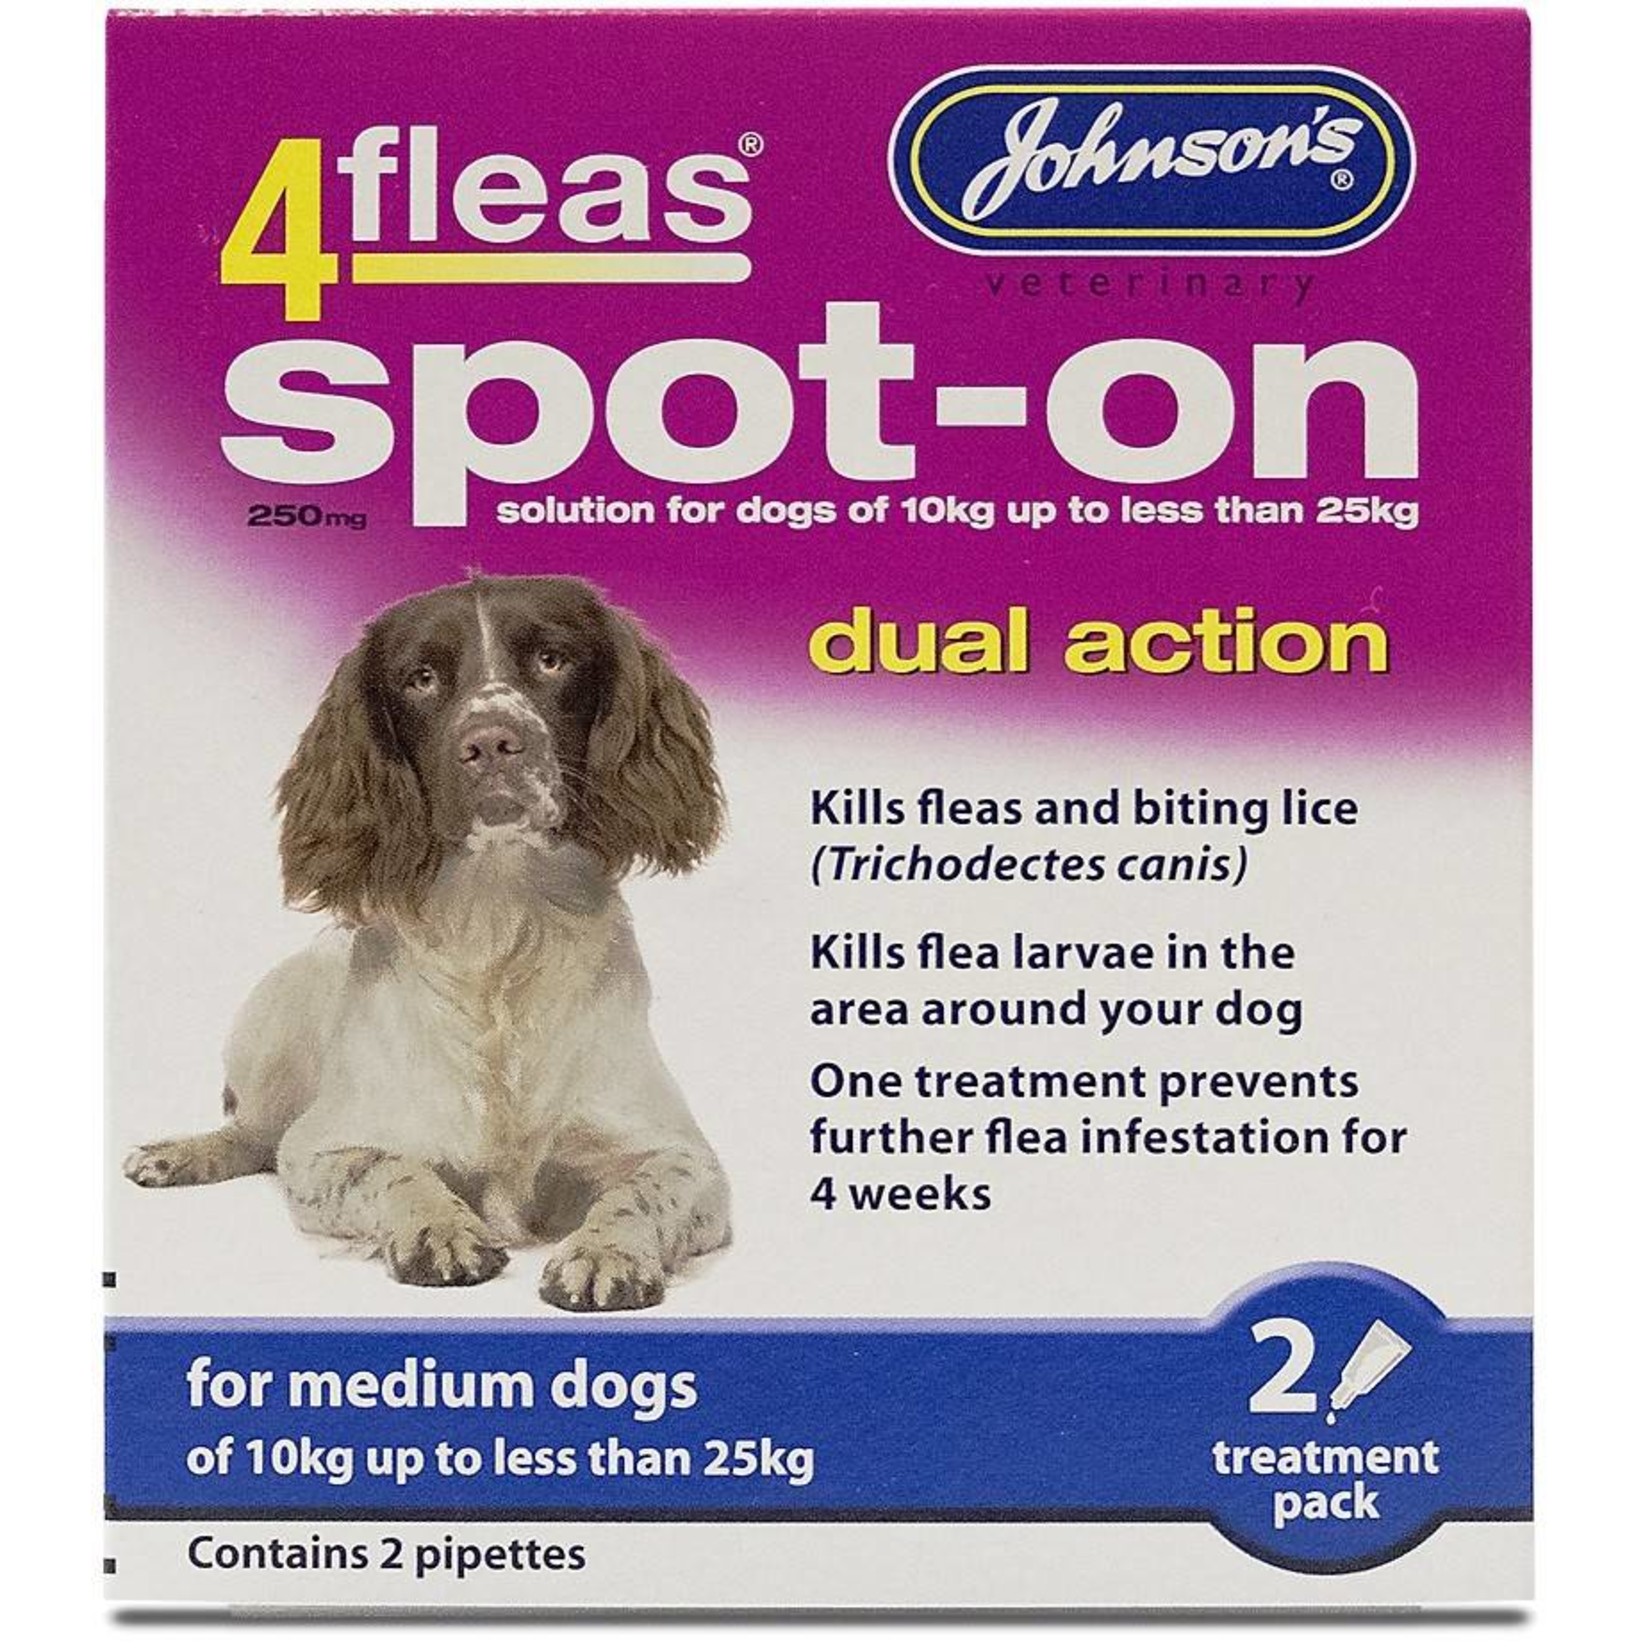 Johnson's Veterinary 4fleas Dual Action Flea & Tick Spot-on Dog